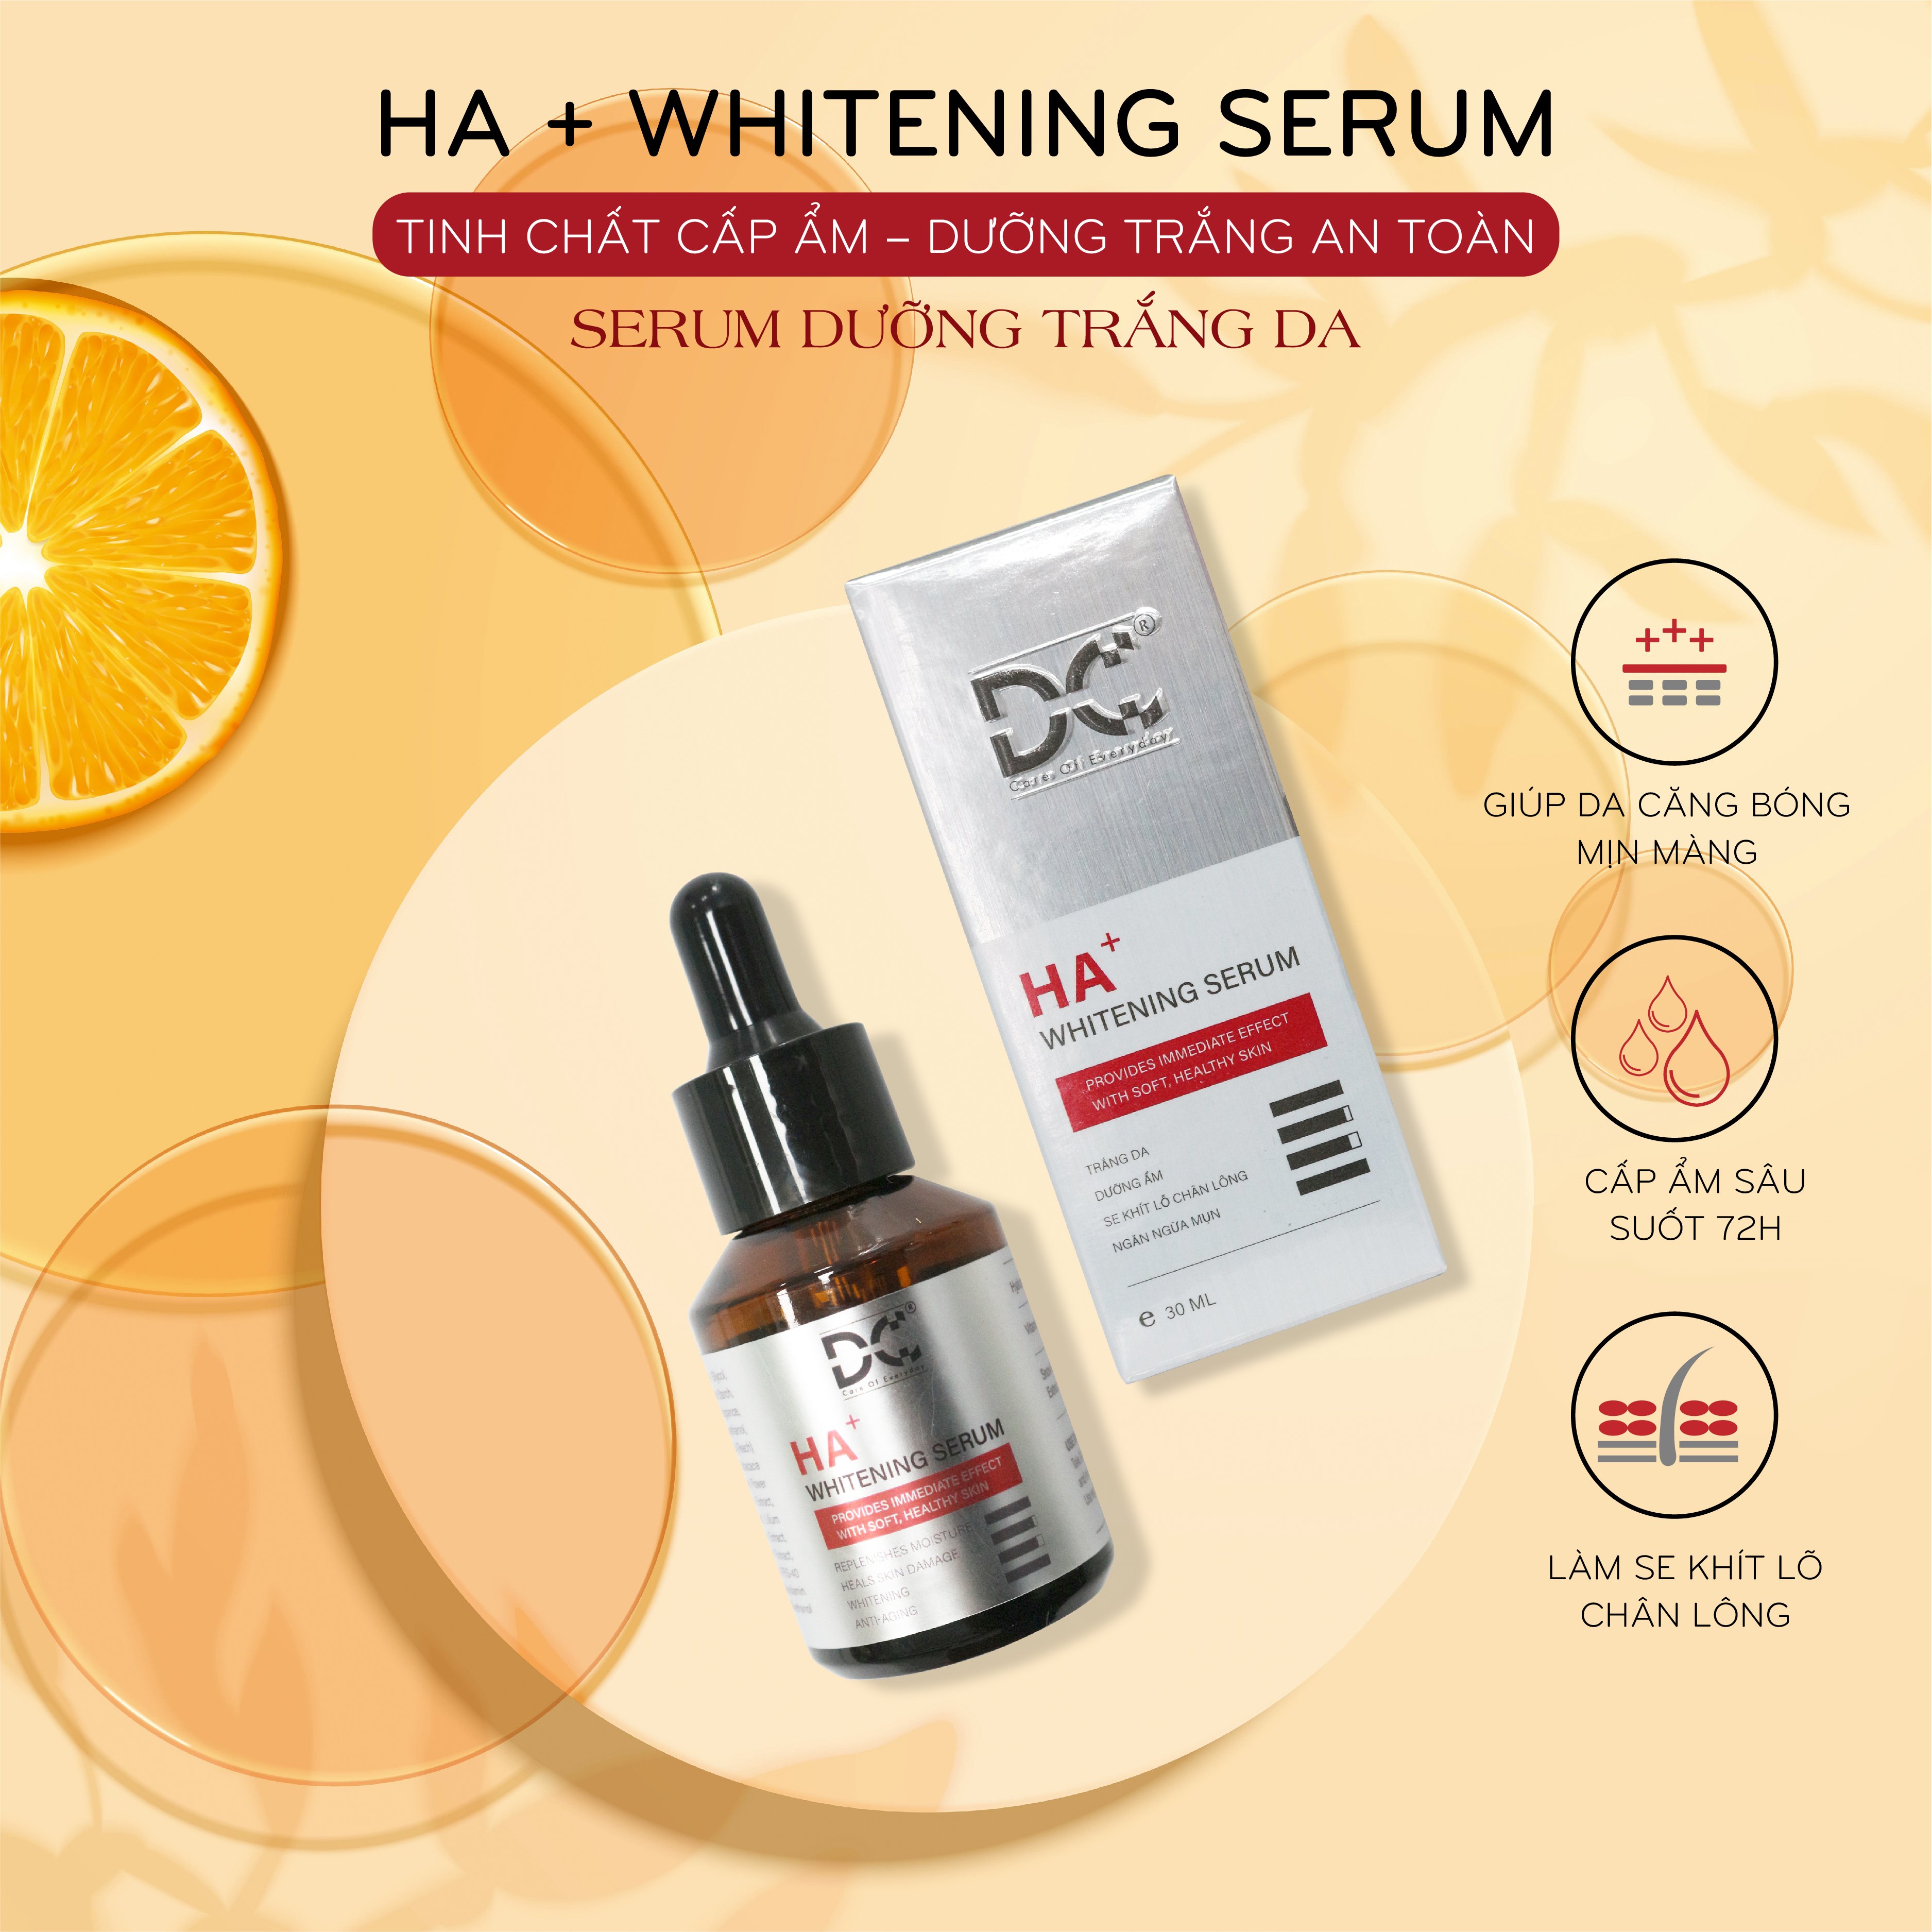 HA + Whitening Serum DC - Serum Dưỡng Trắng Da 50gr